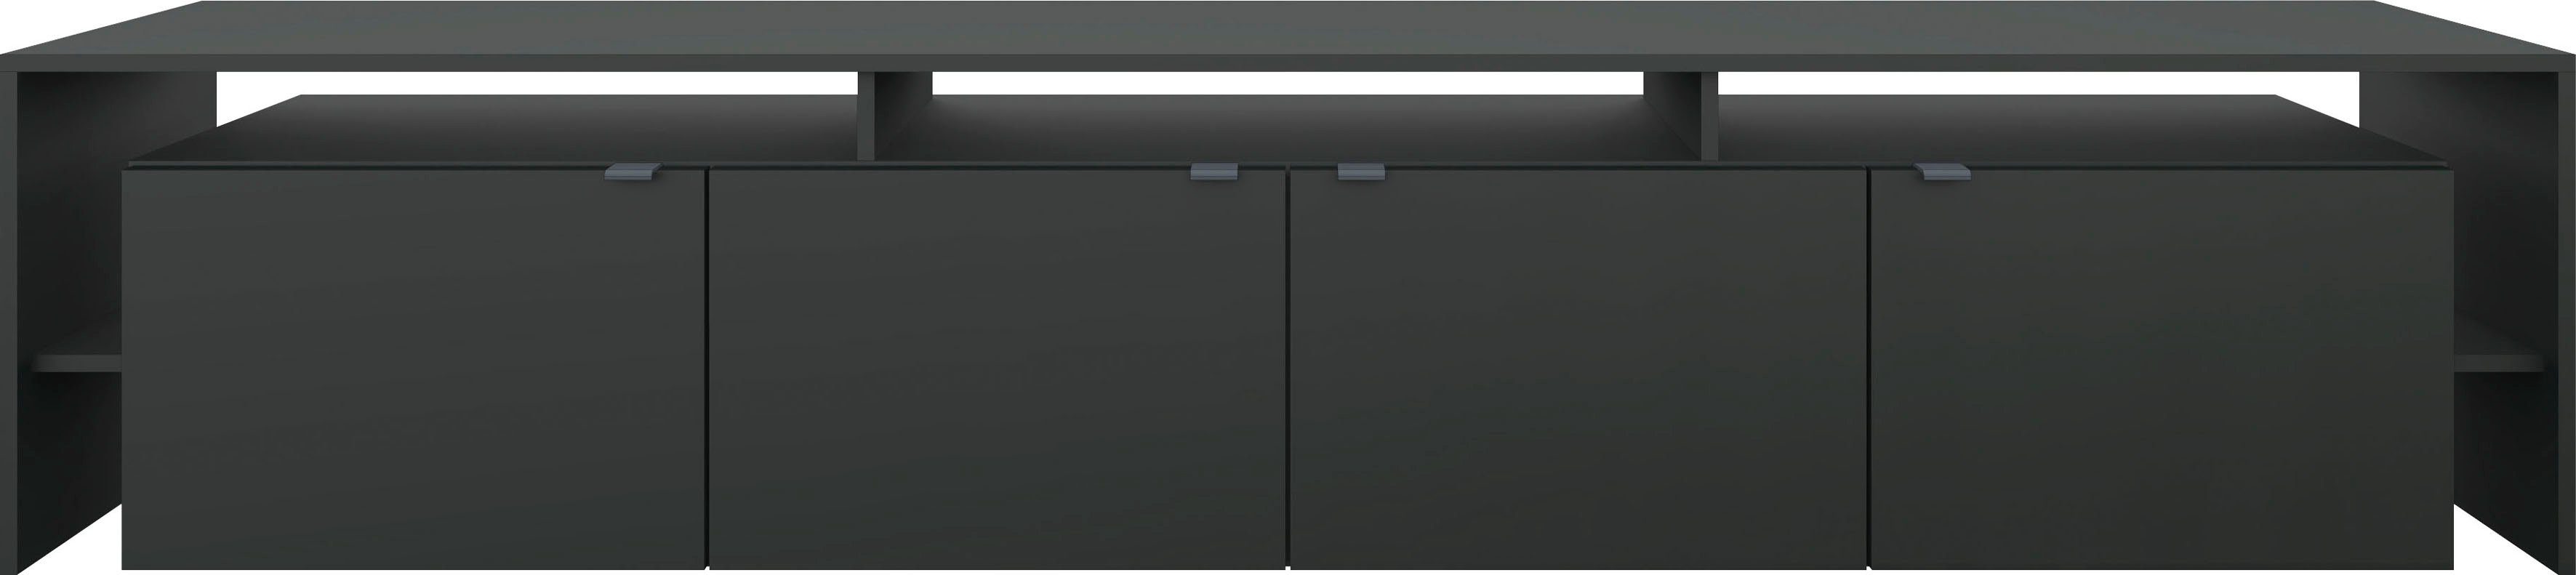 borchardt Möbel TV-Schrank Sophia Breite 220 cm, mit Überbau schwarz matt / schwarz matt | schwarz matt